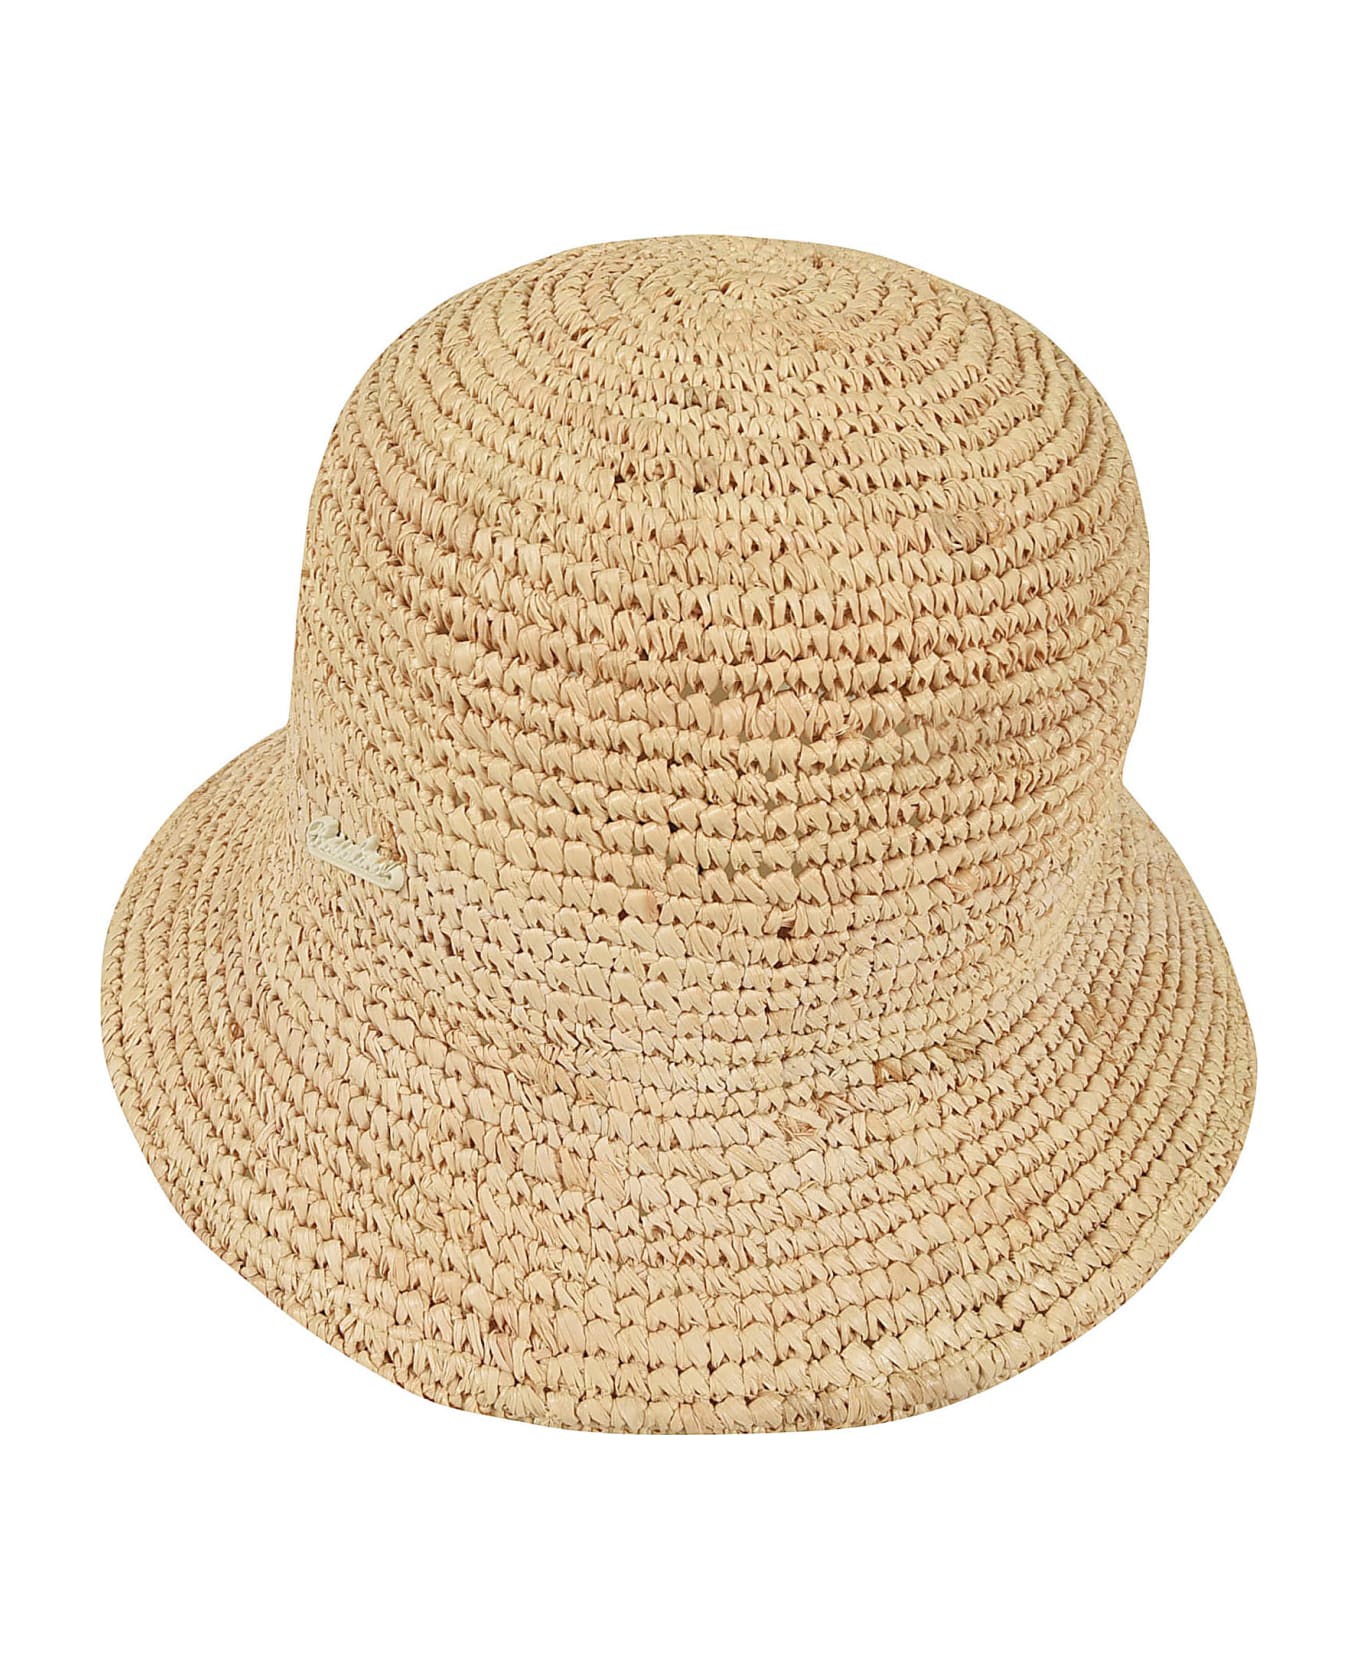 Borsalino Rafia Crochet Bucket Hat - Naturale